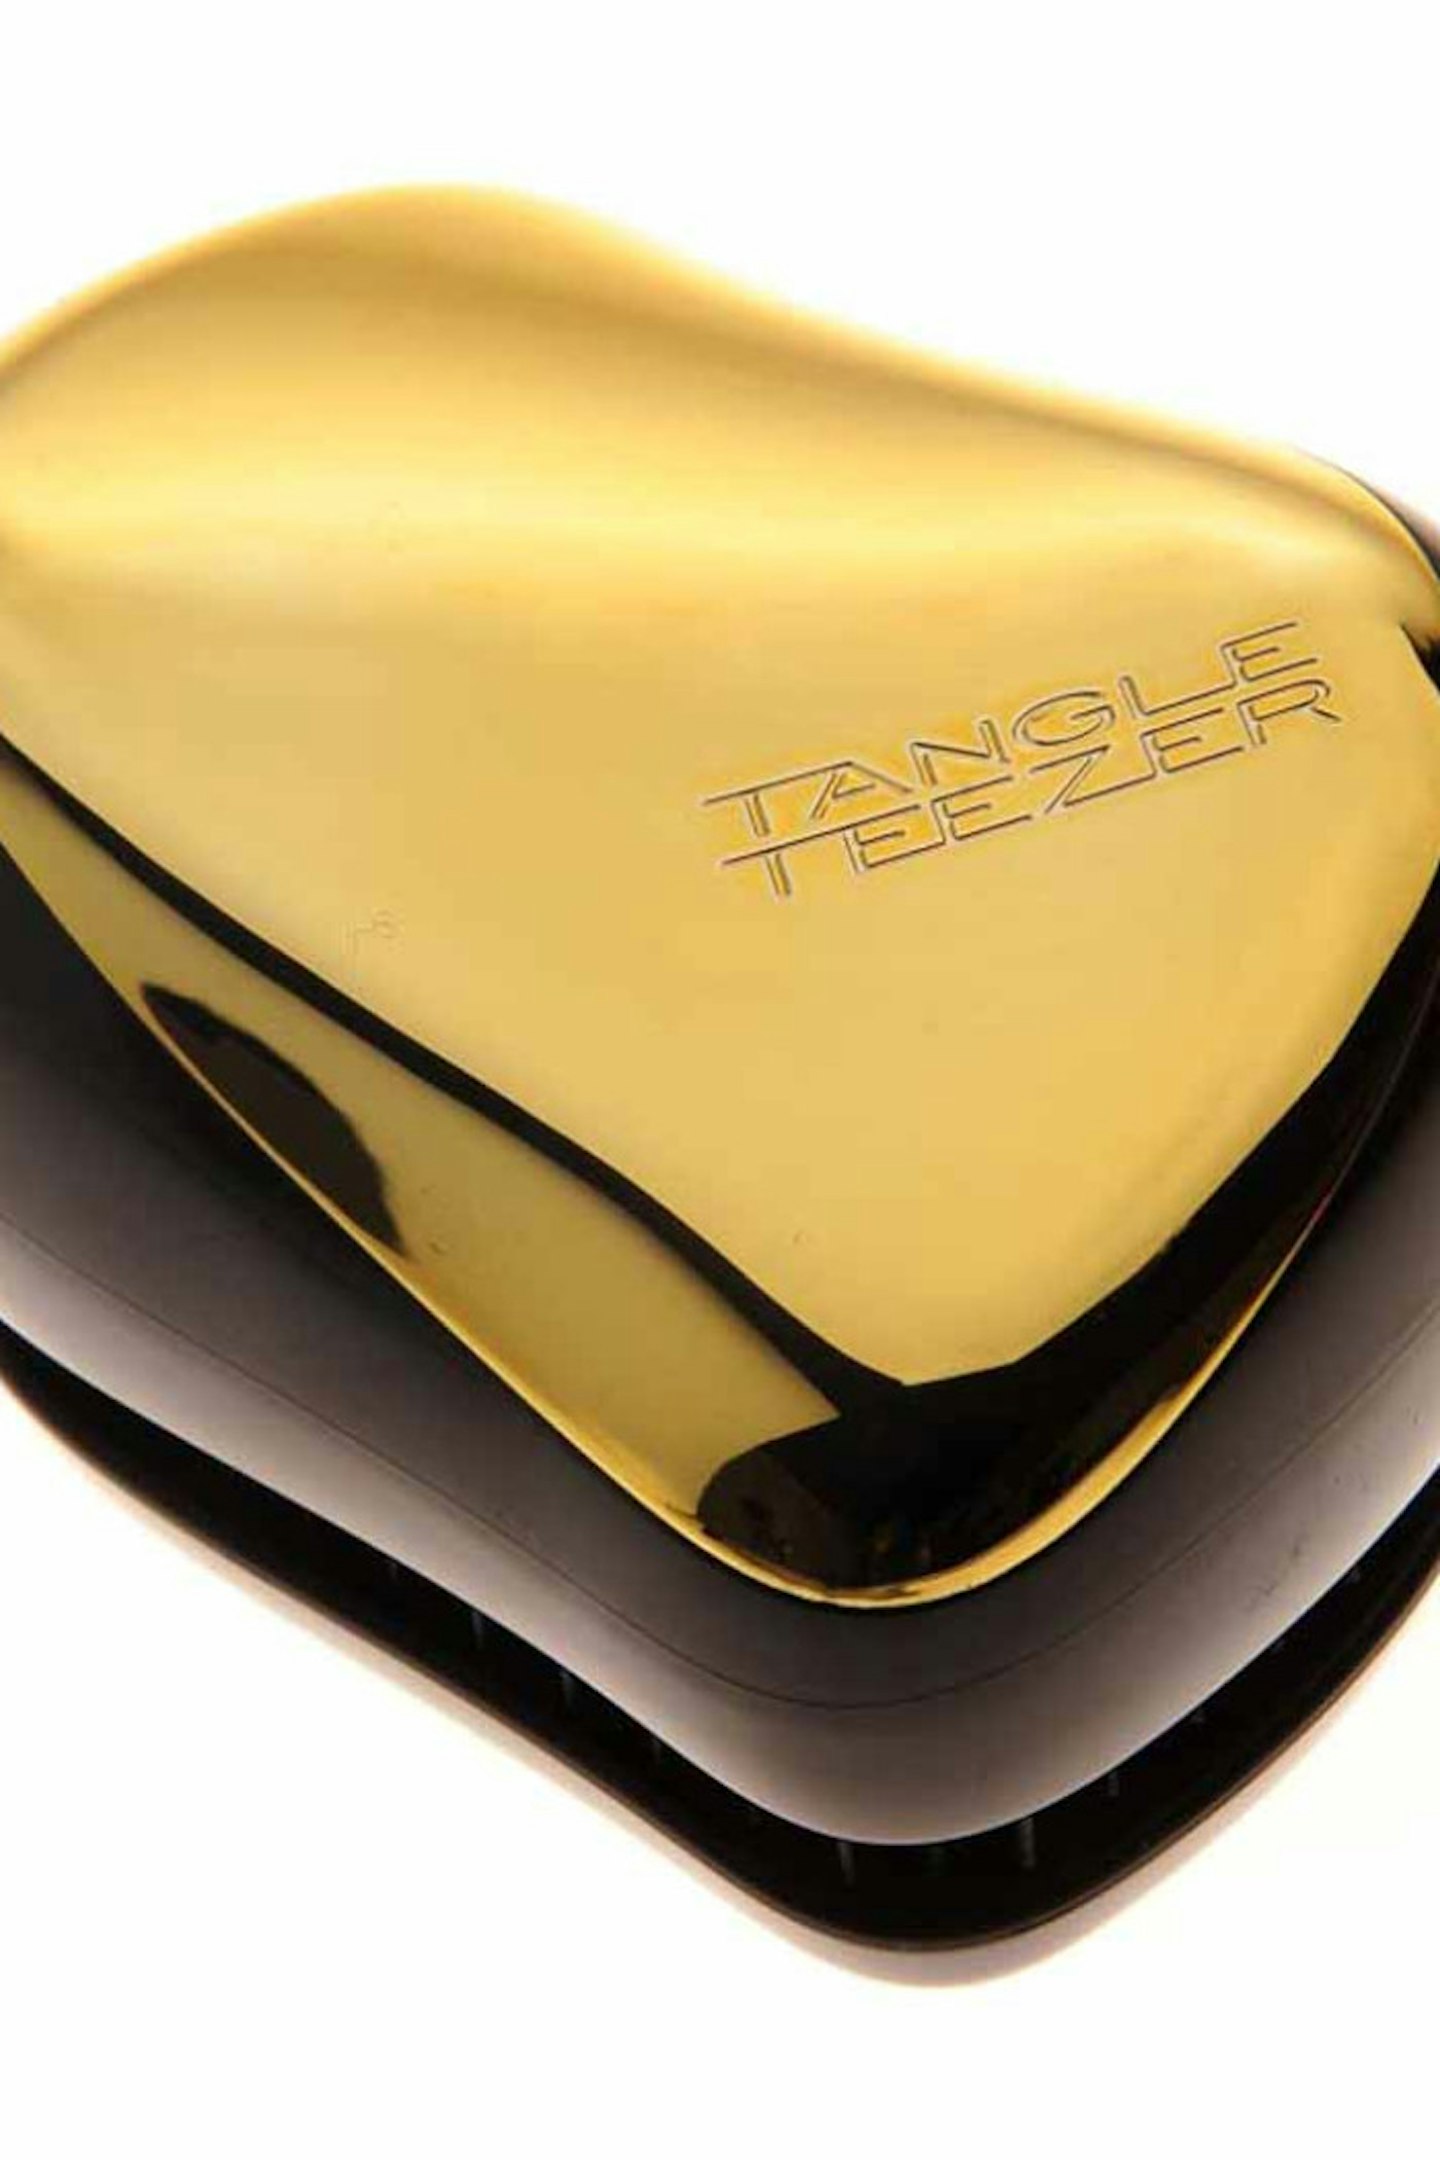 Tangle Teezer, £12.25